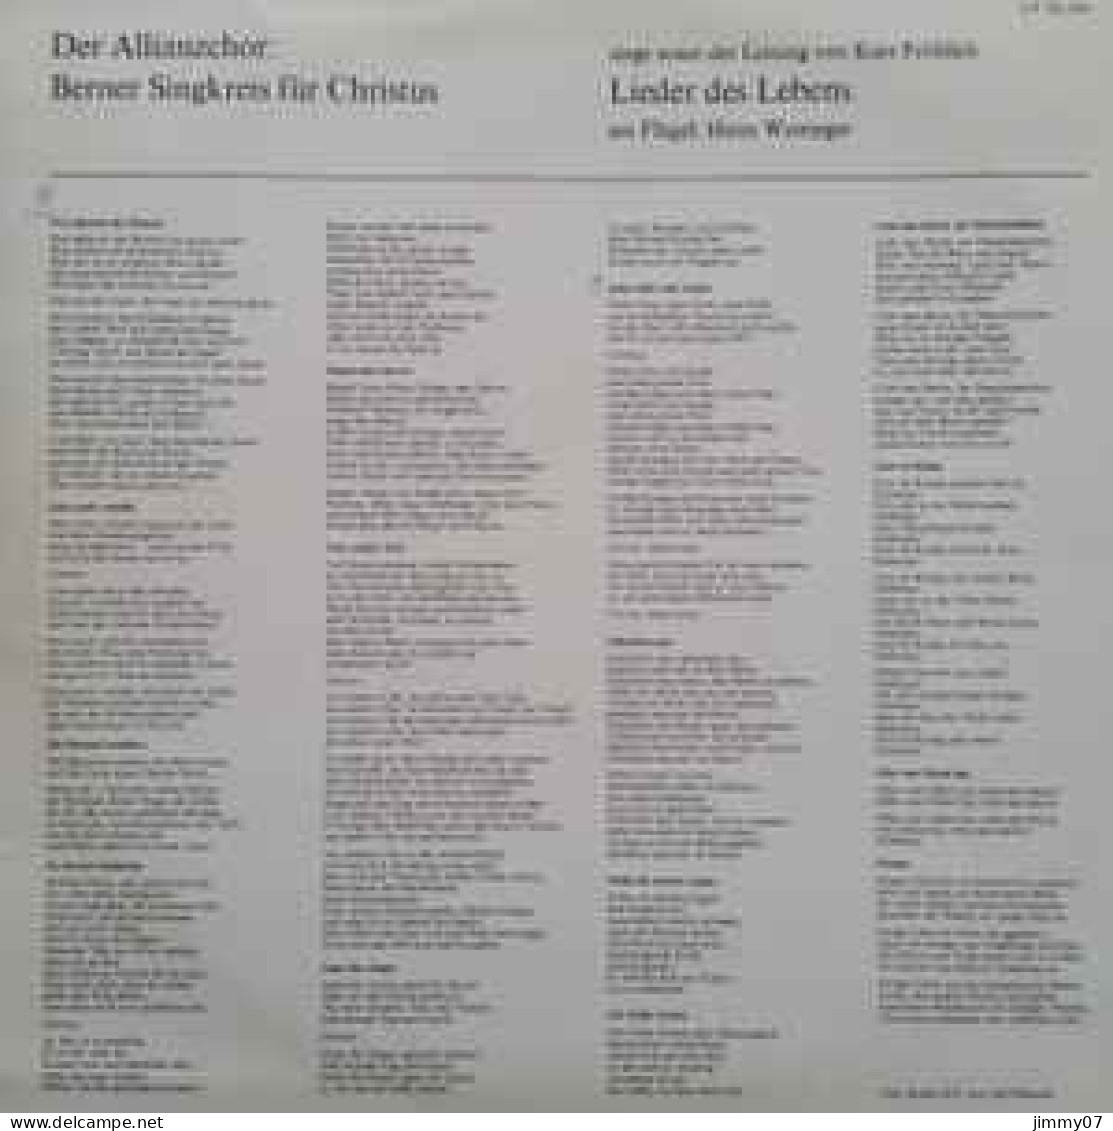 Berner Singkreis Für Christus - Lieder Des Lebens (LP, Album) - Klassik